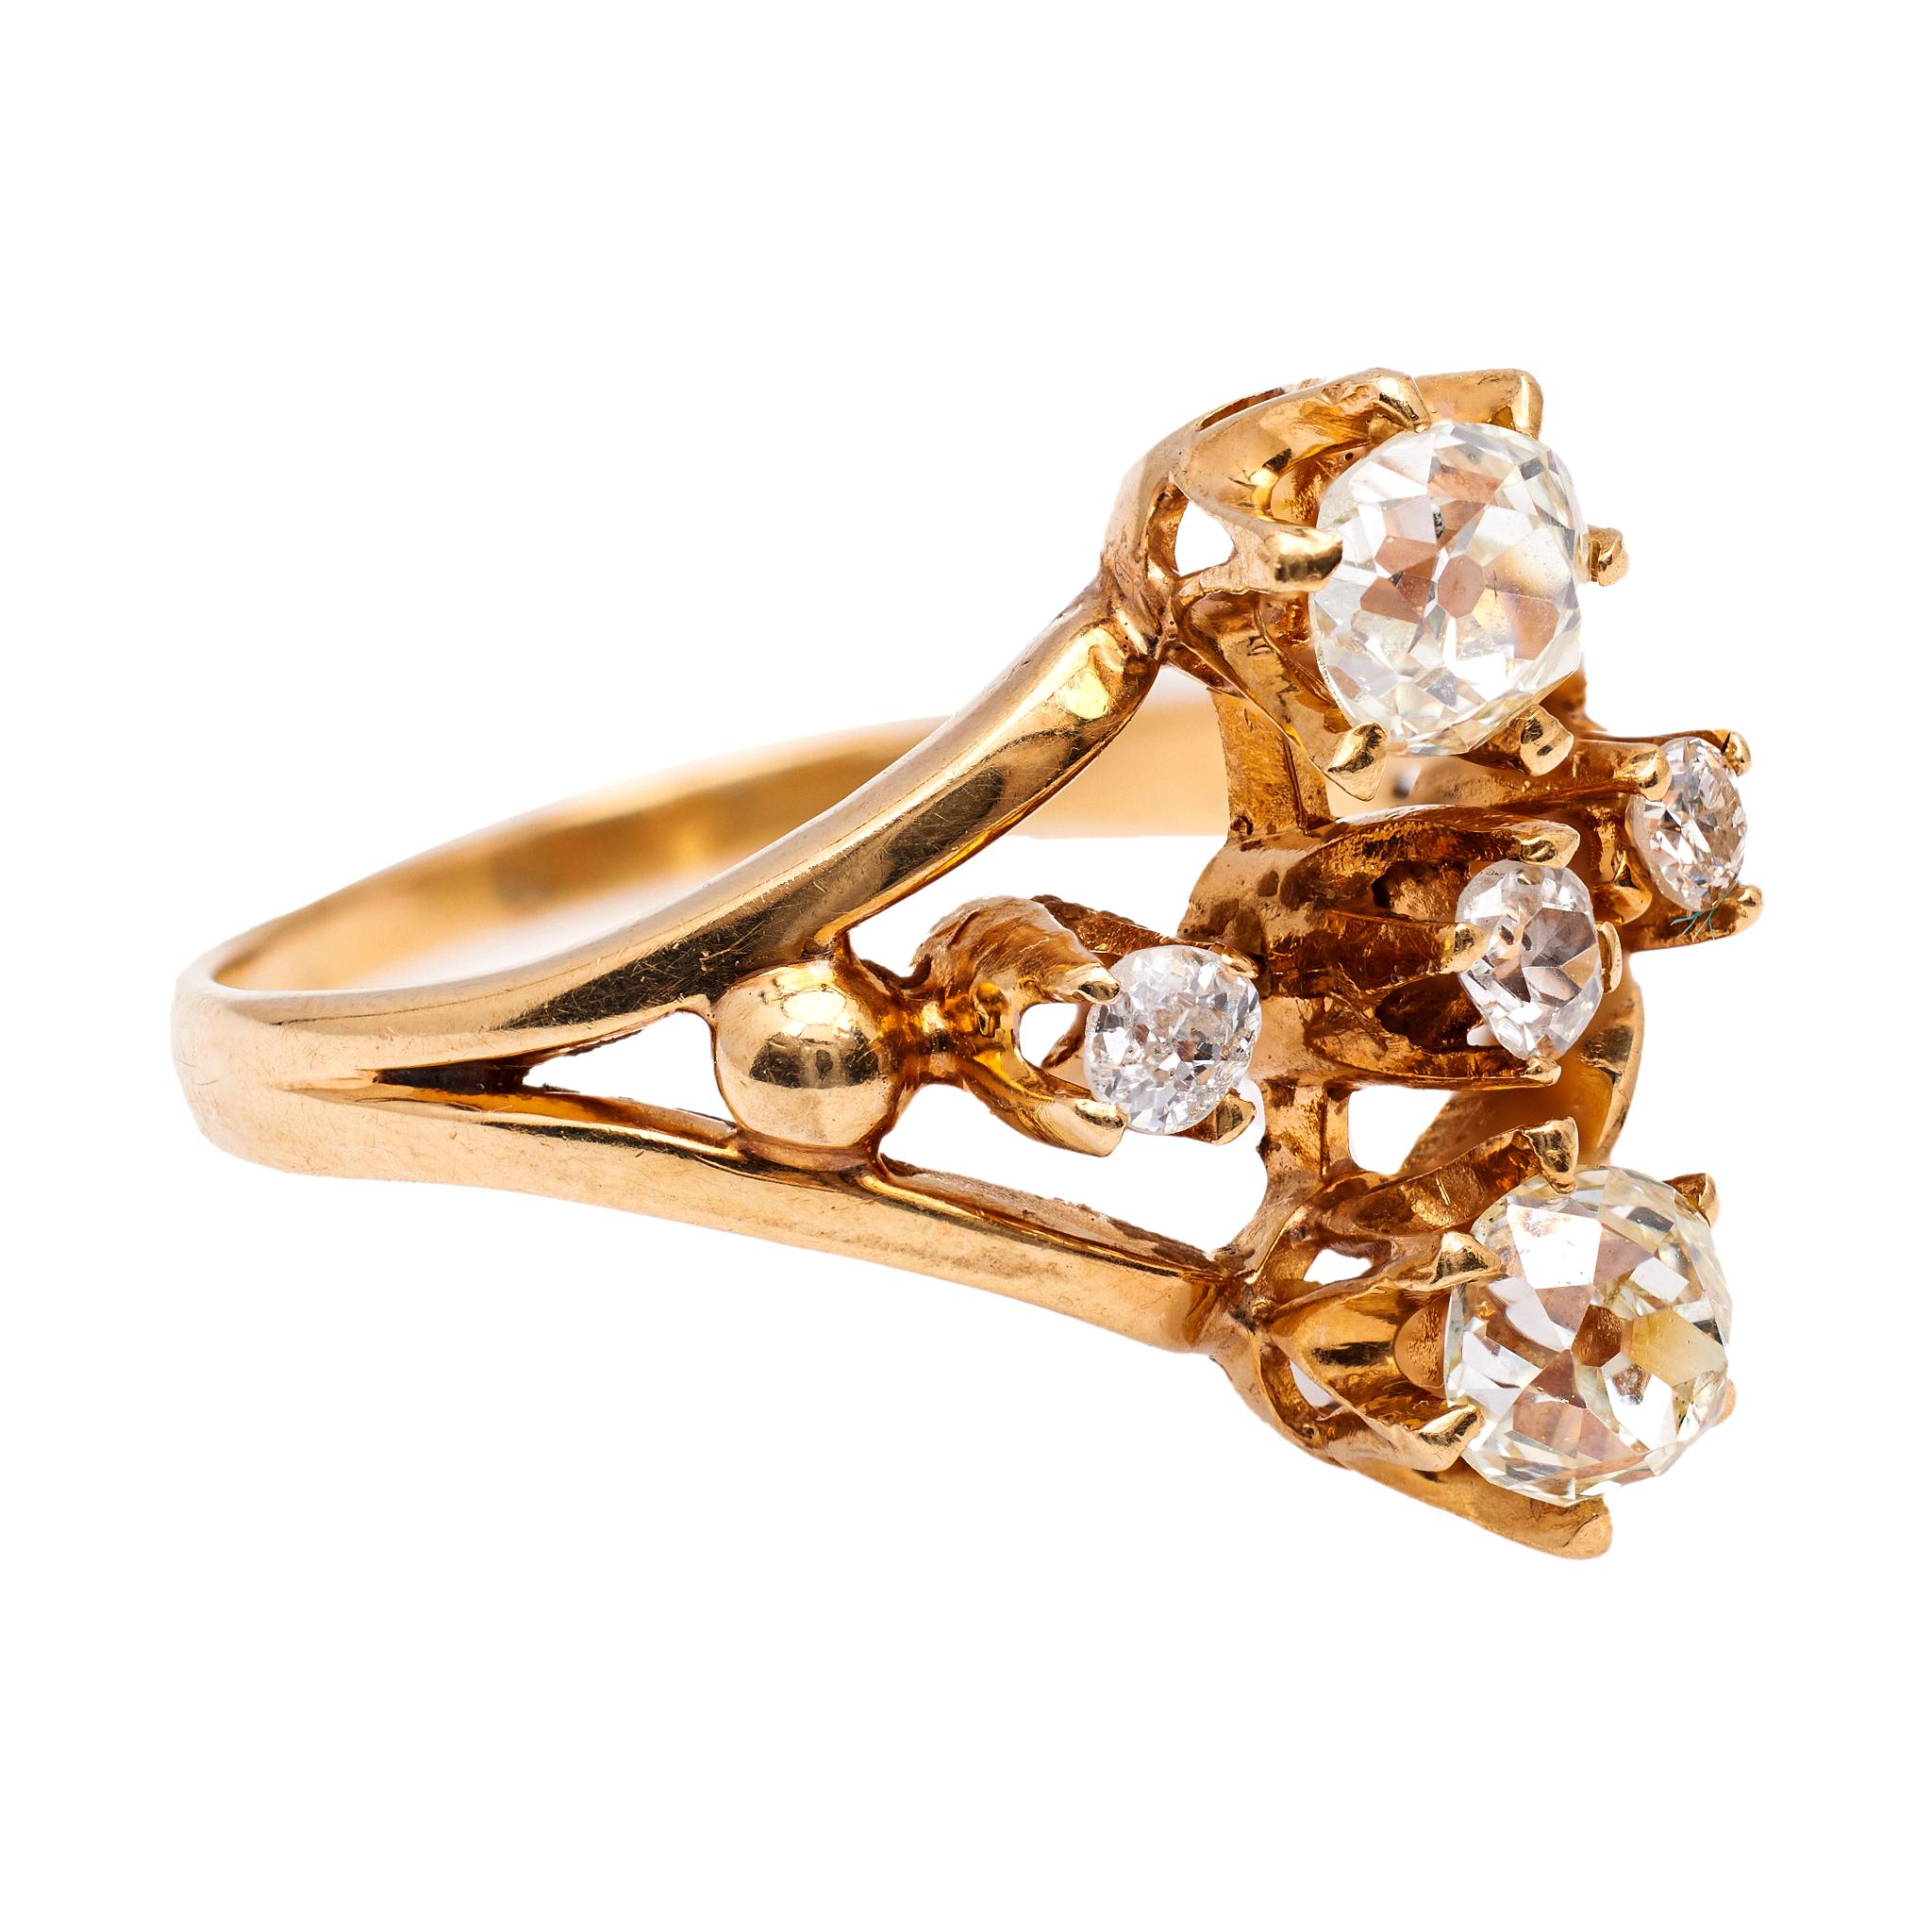 Women's or Men's Belle Époque French Diamond 18k Yellow Gold Ring